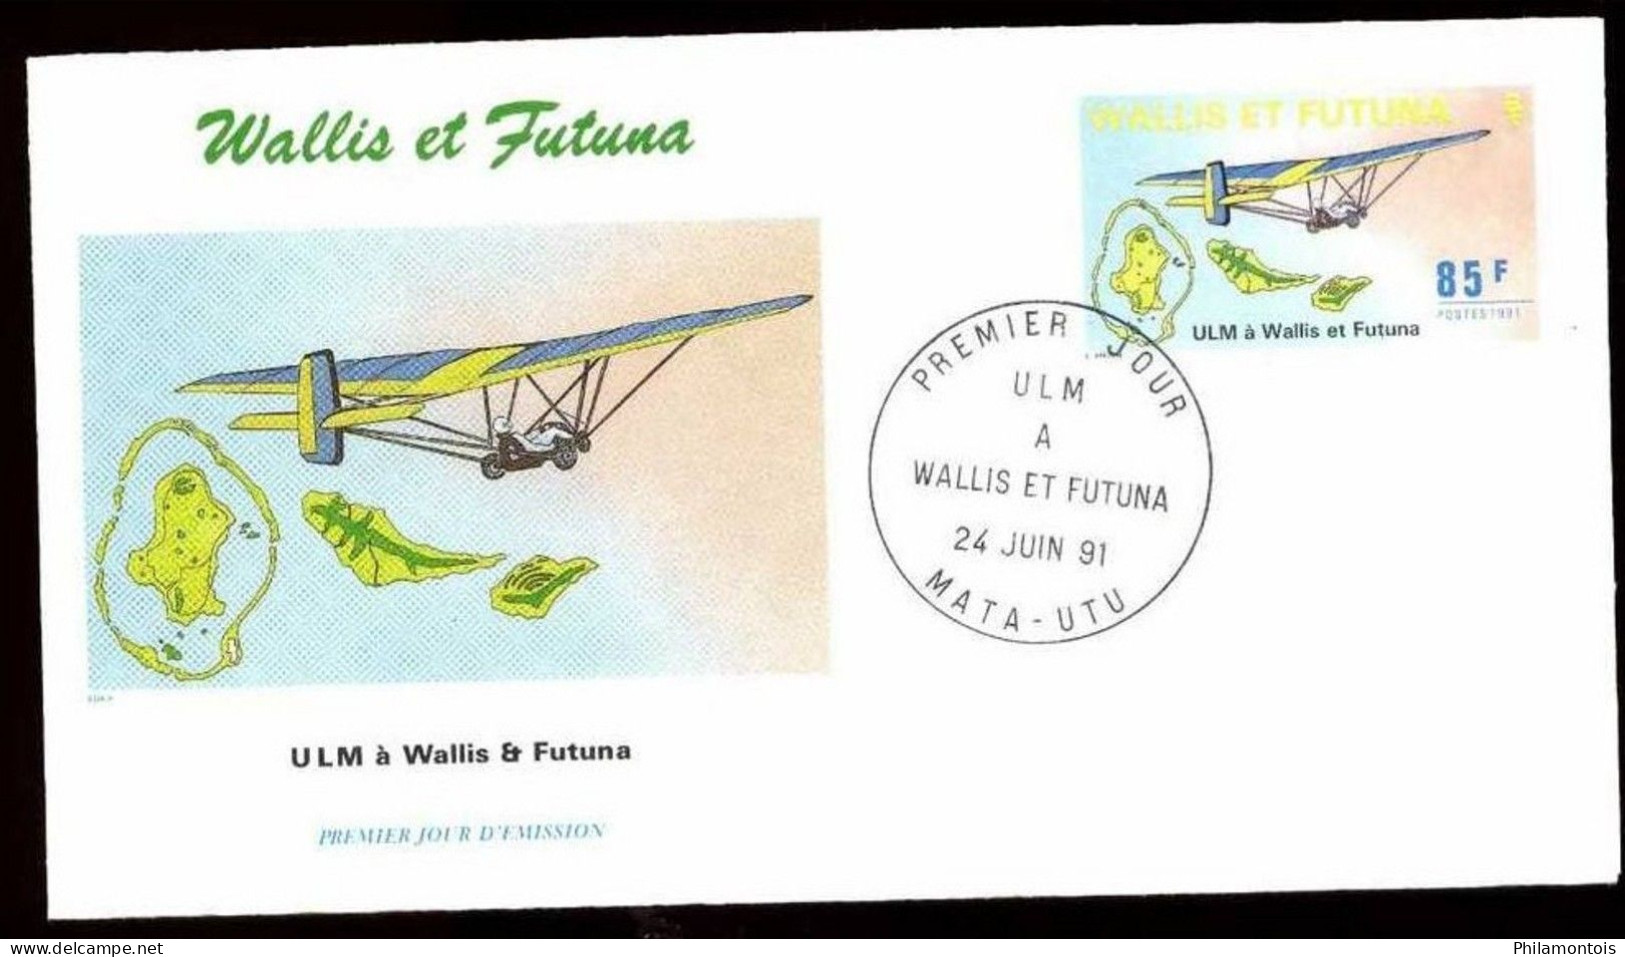 WALLIS - Cachet PJ "ULM à Wallis Et Futuna - MATA UTU" - 24 Juin 91 - Très Beau. - Covers & Documents